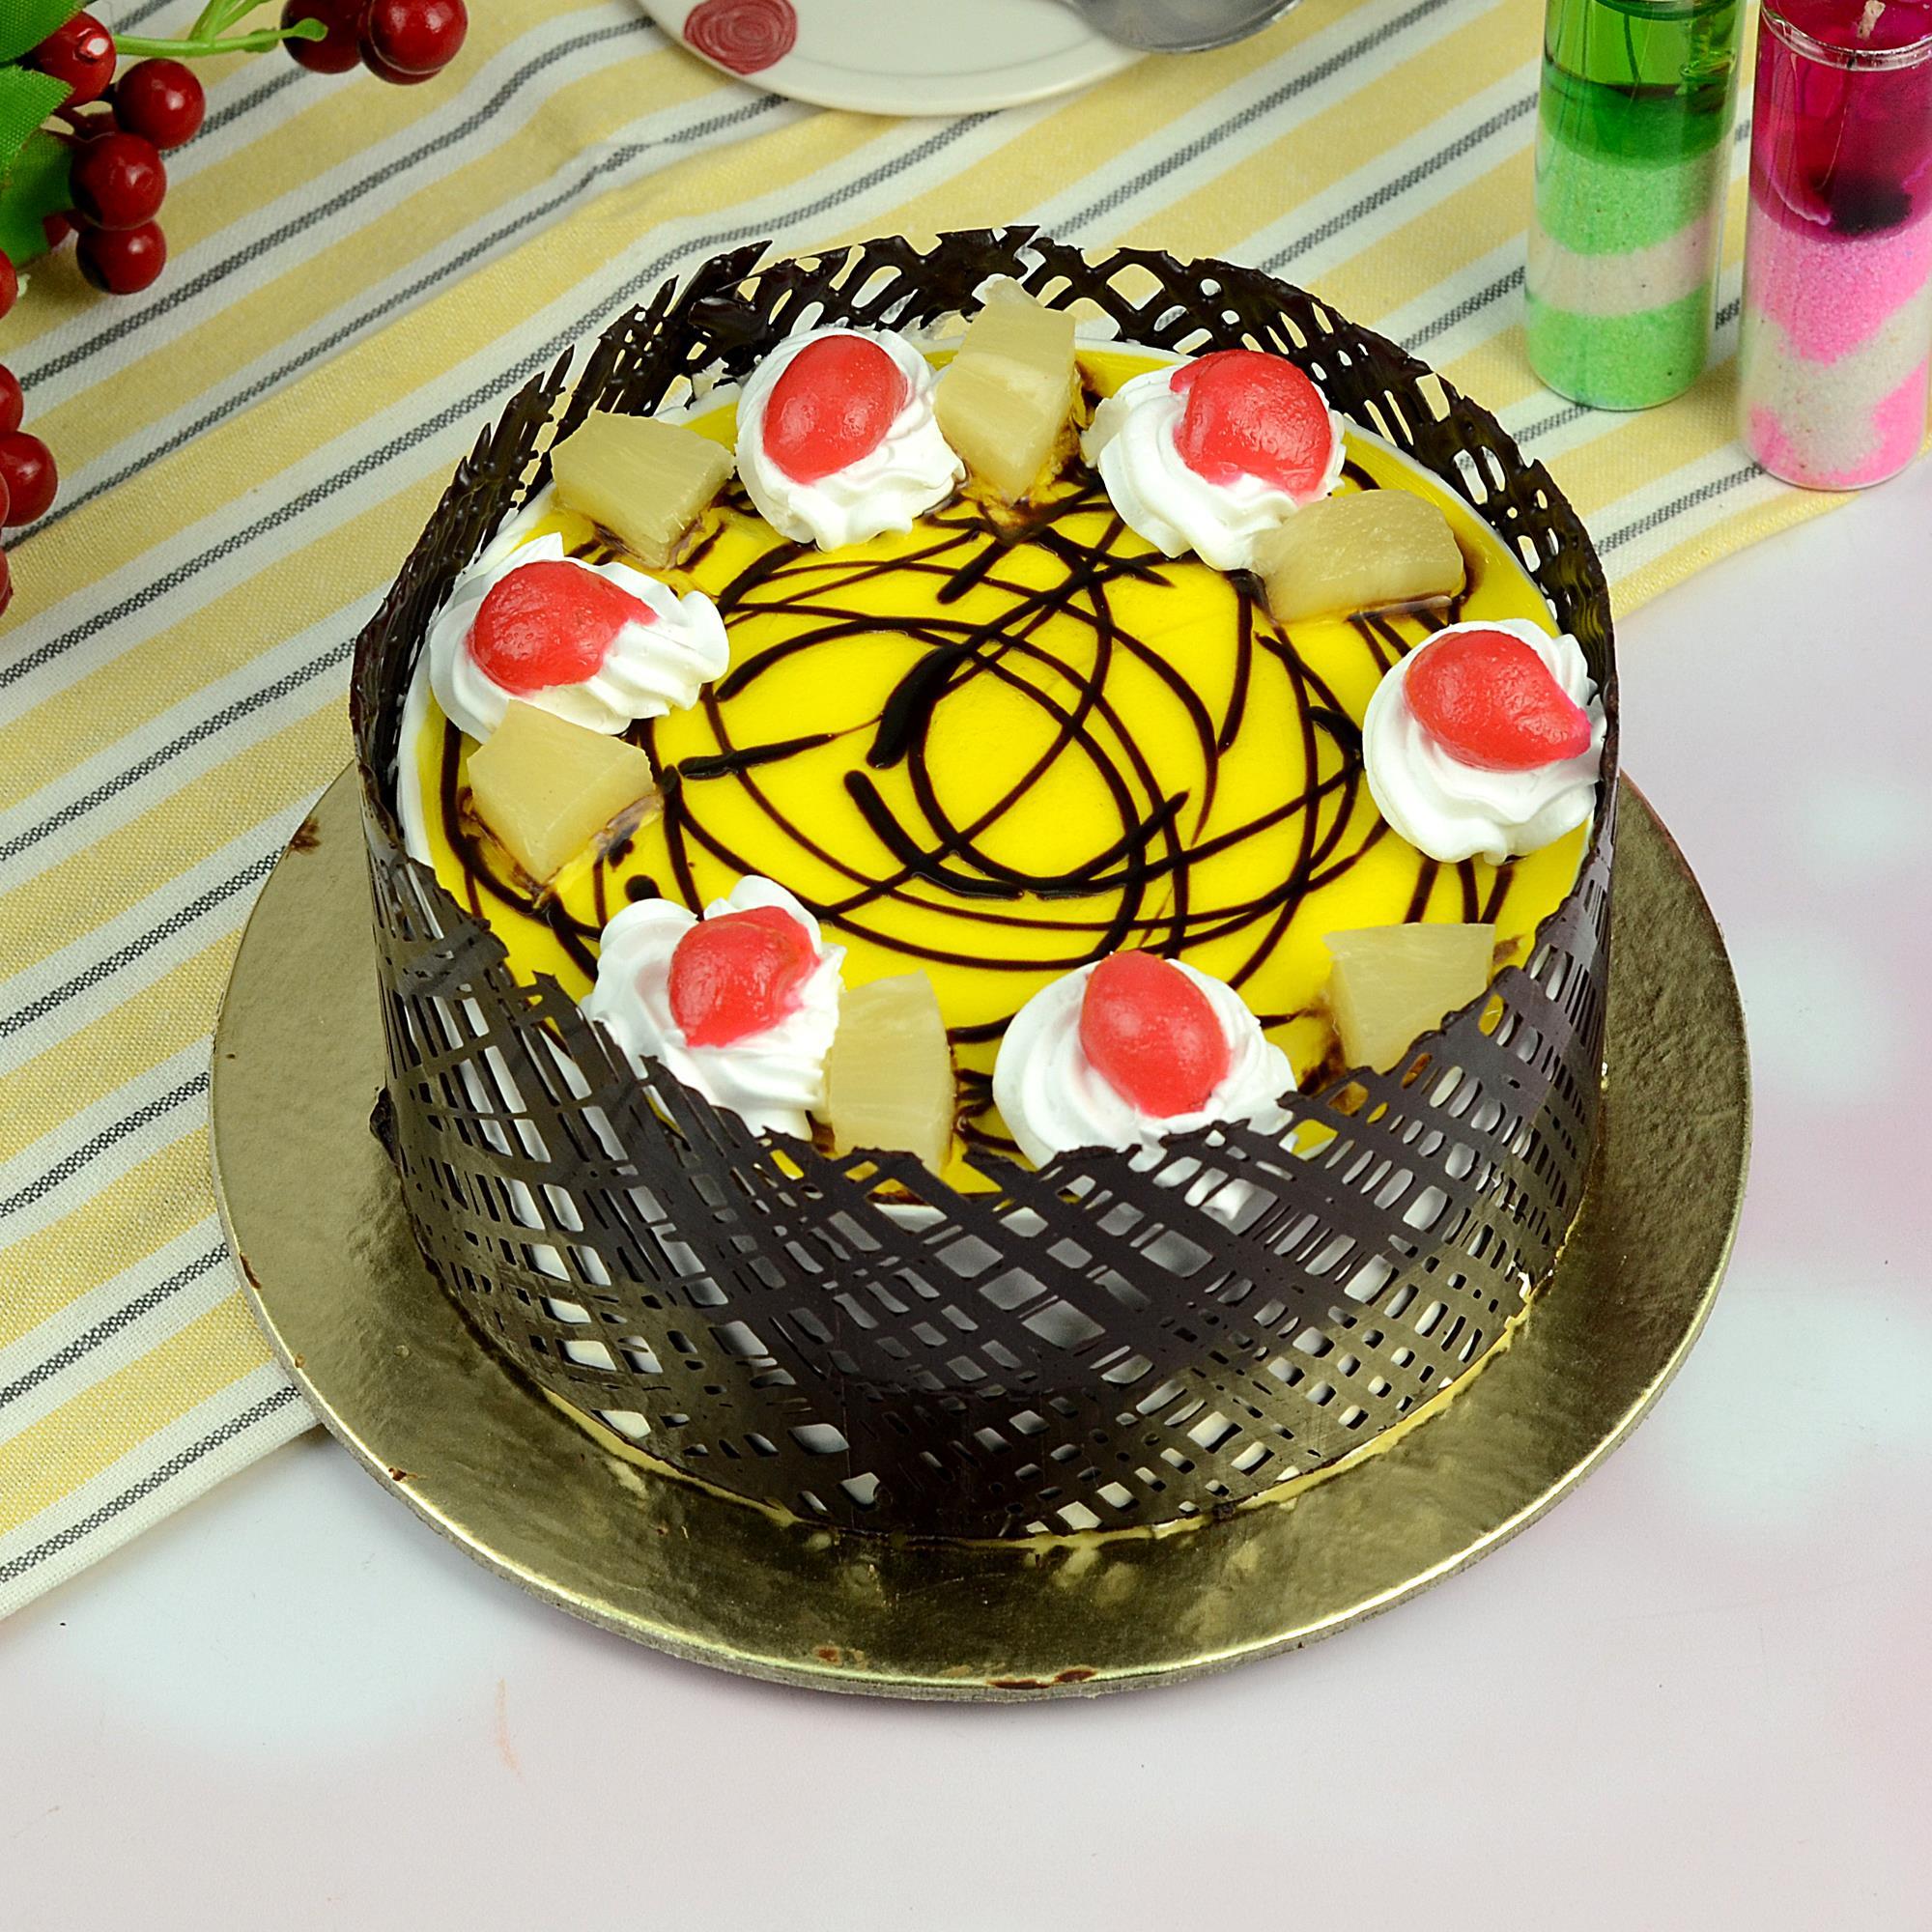 Stunning Proposal Pineapple Cake | Cakiyo